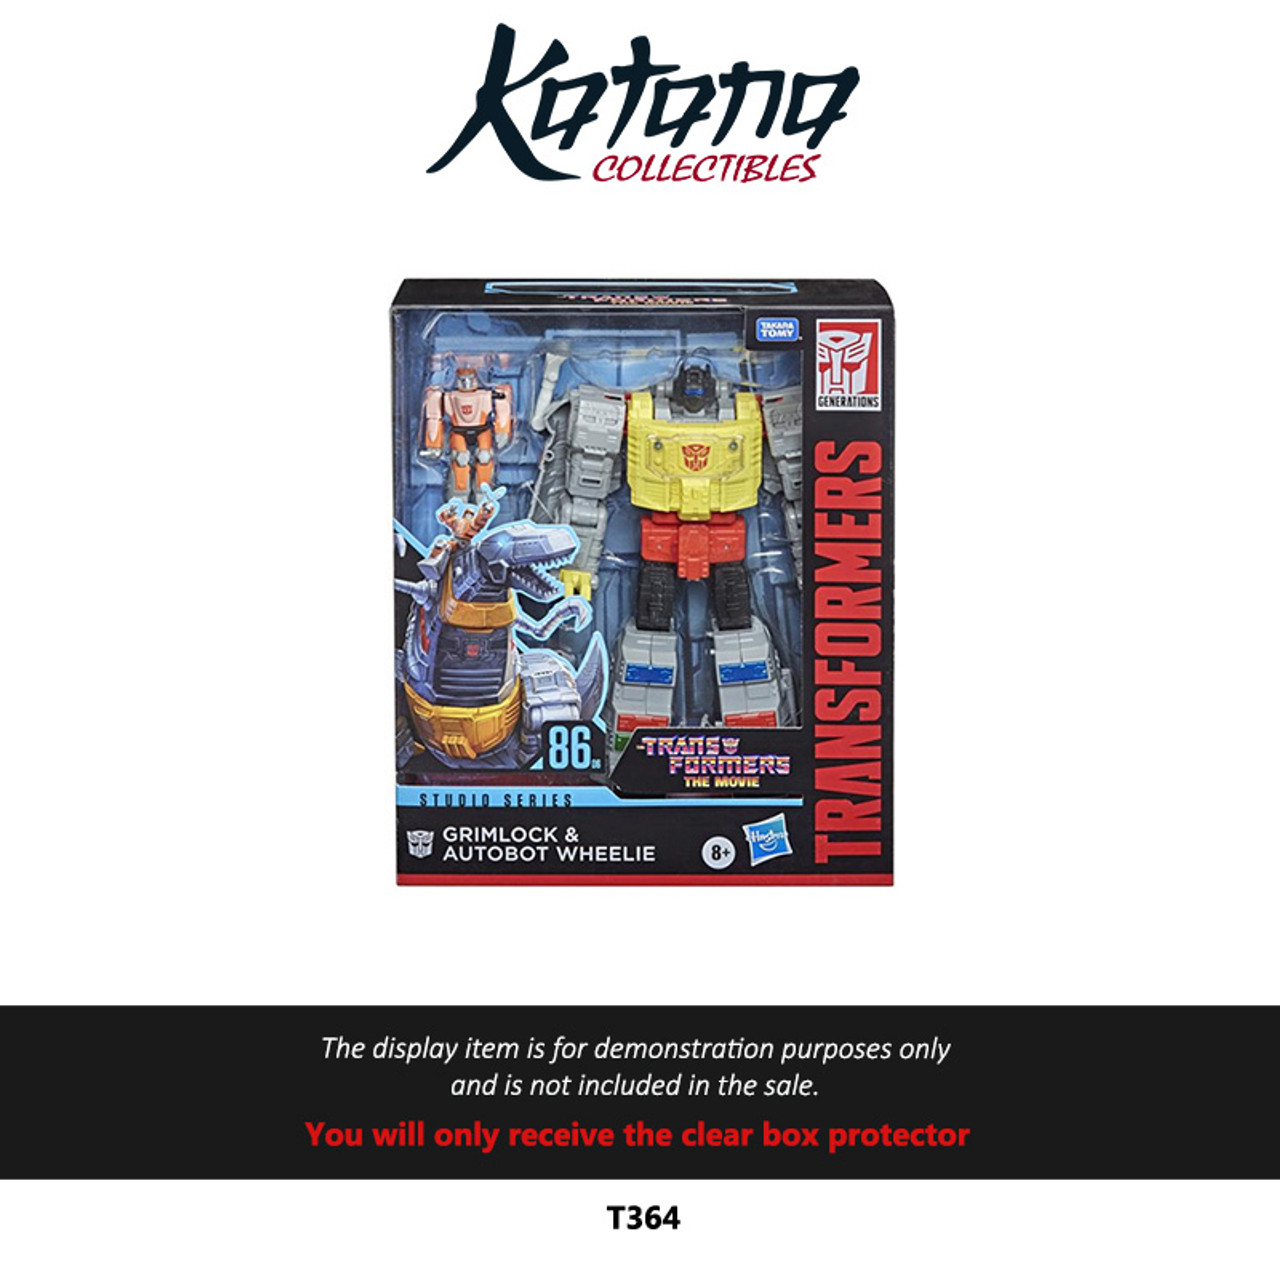 Katana Collectibles Protector For Transformers Studio Series Grimlock & Autobot Wheelie Figures